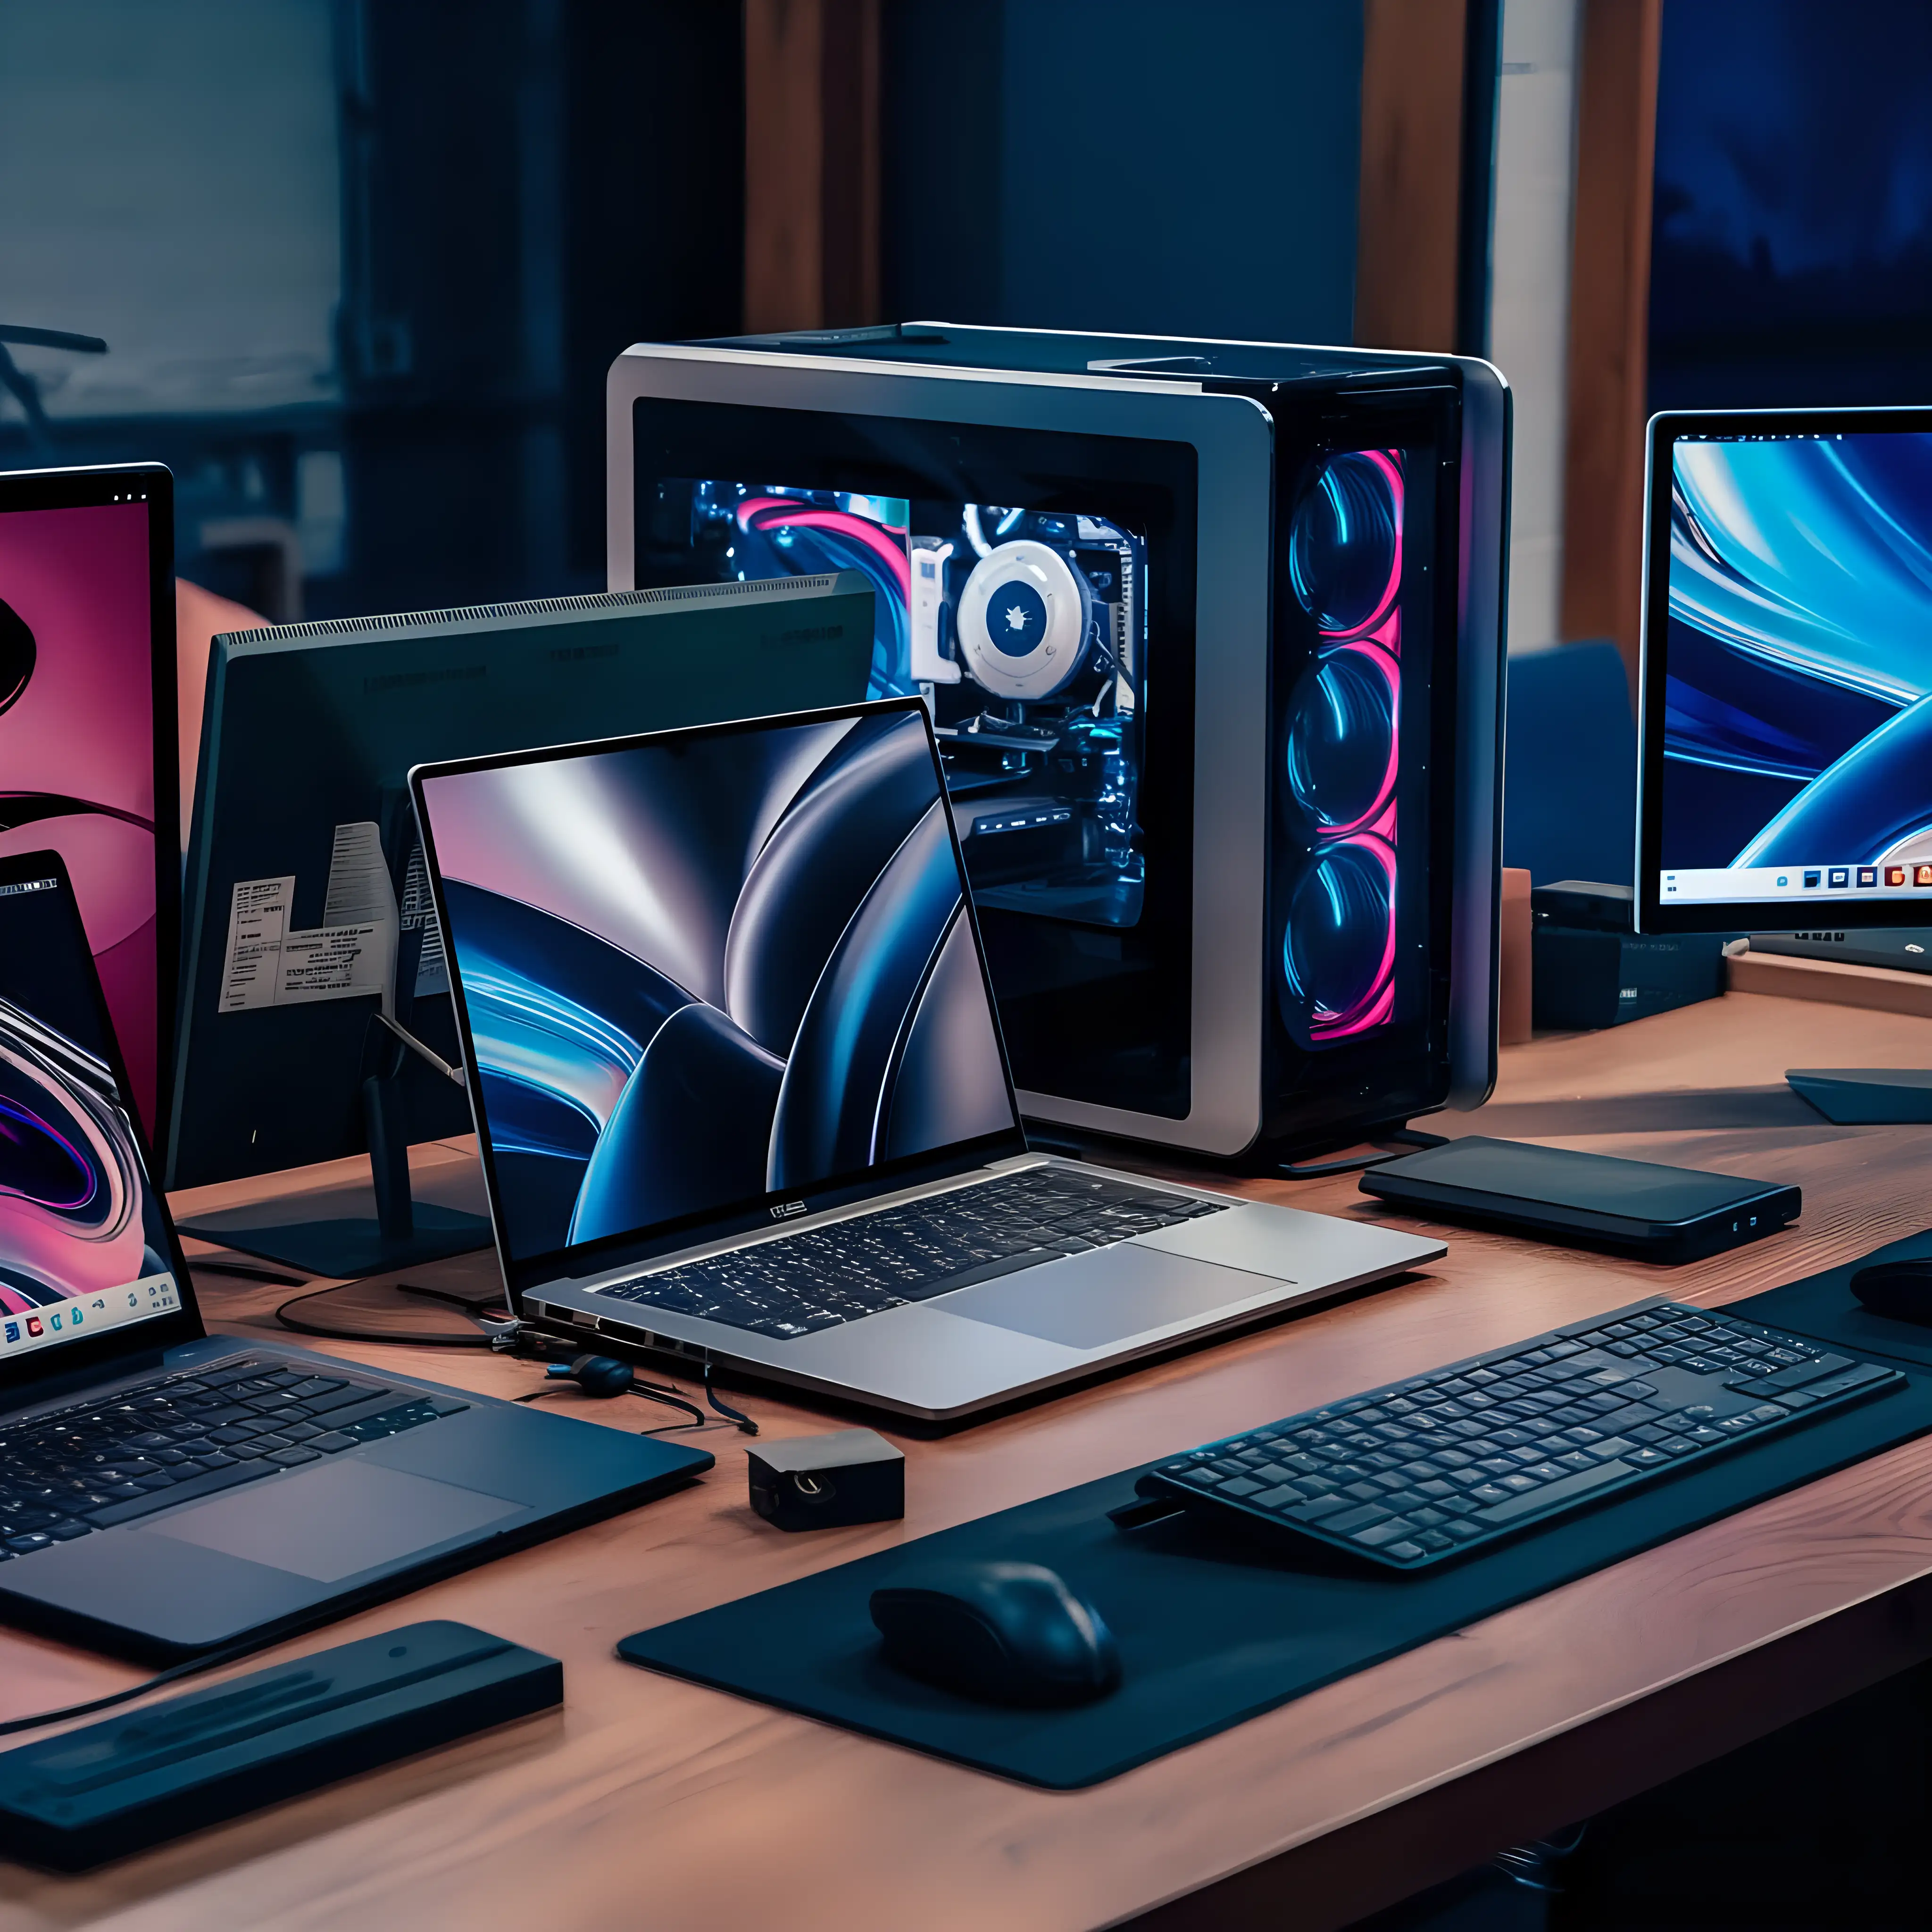 CuttingEdge Laptops Desktop PCs and Accessories Showcase